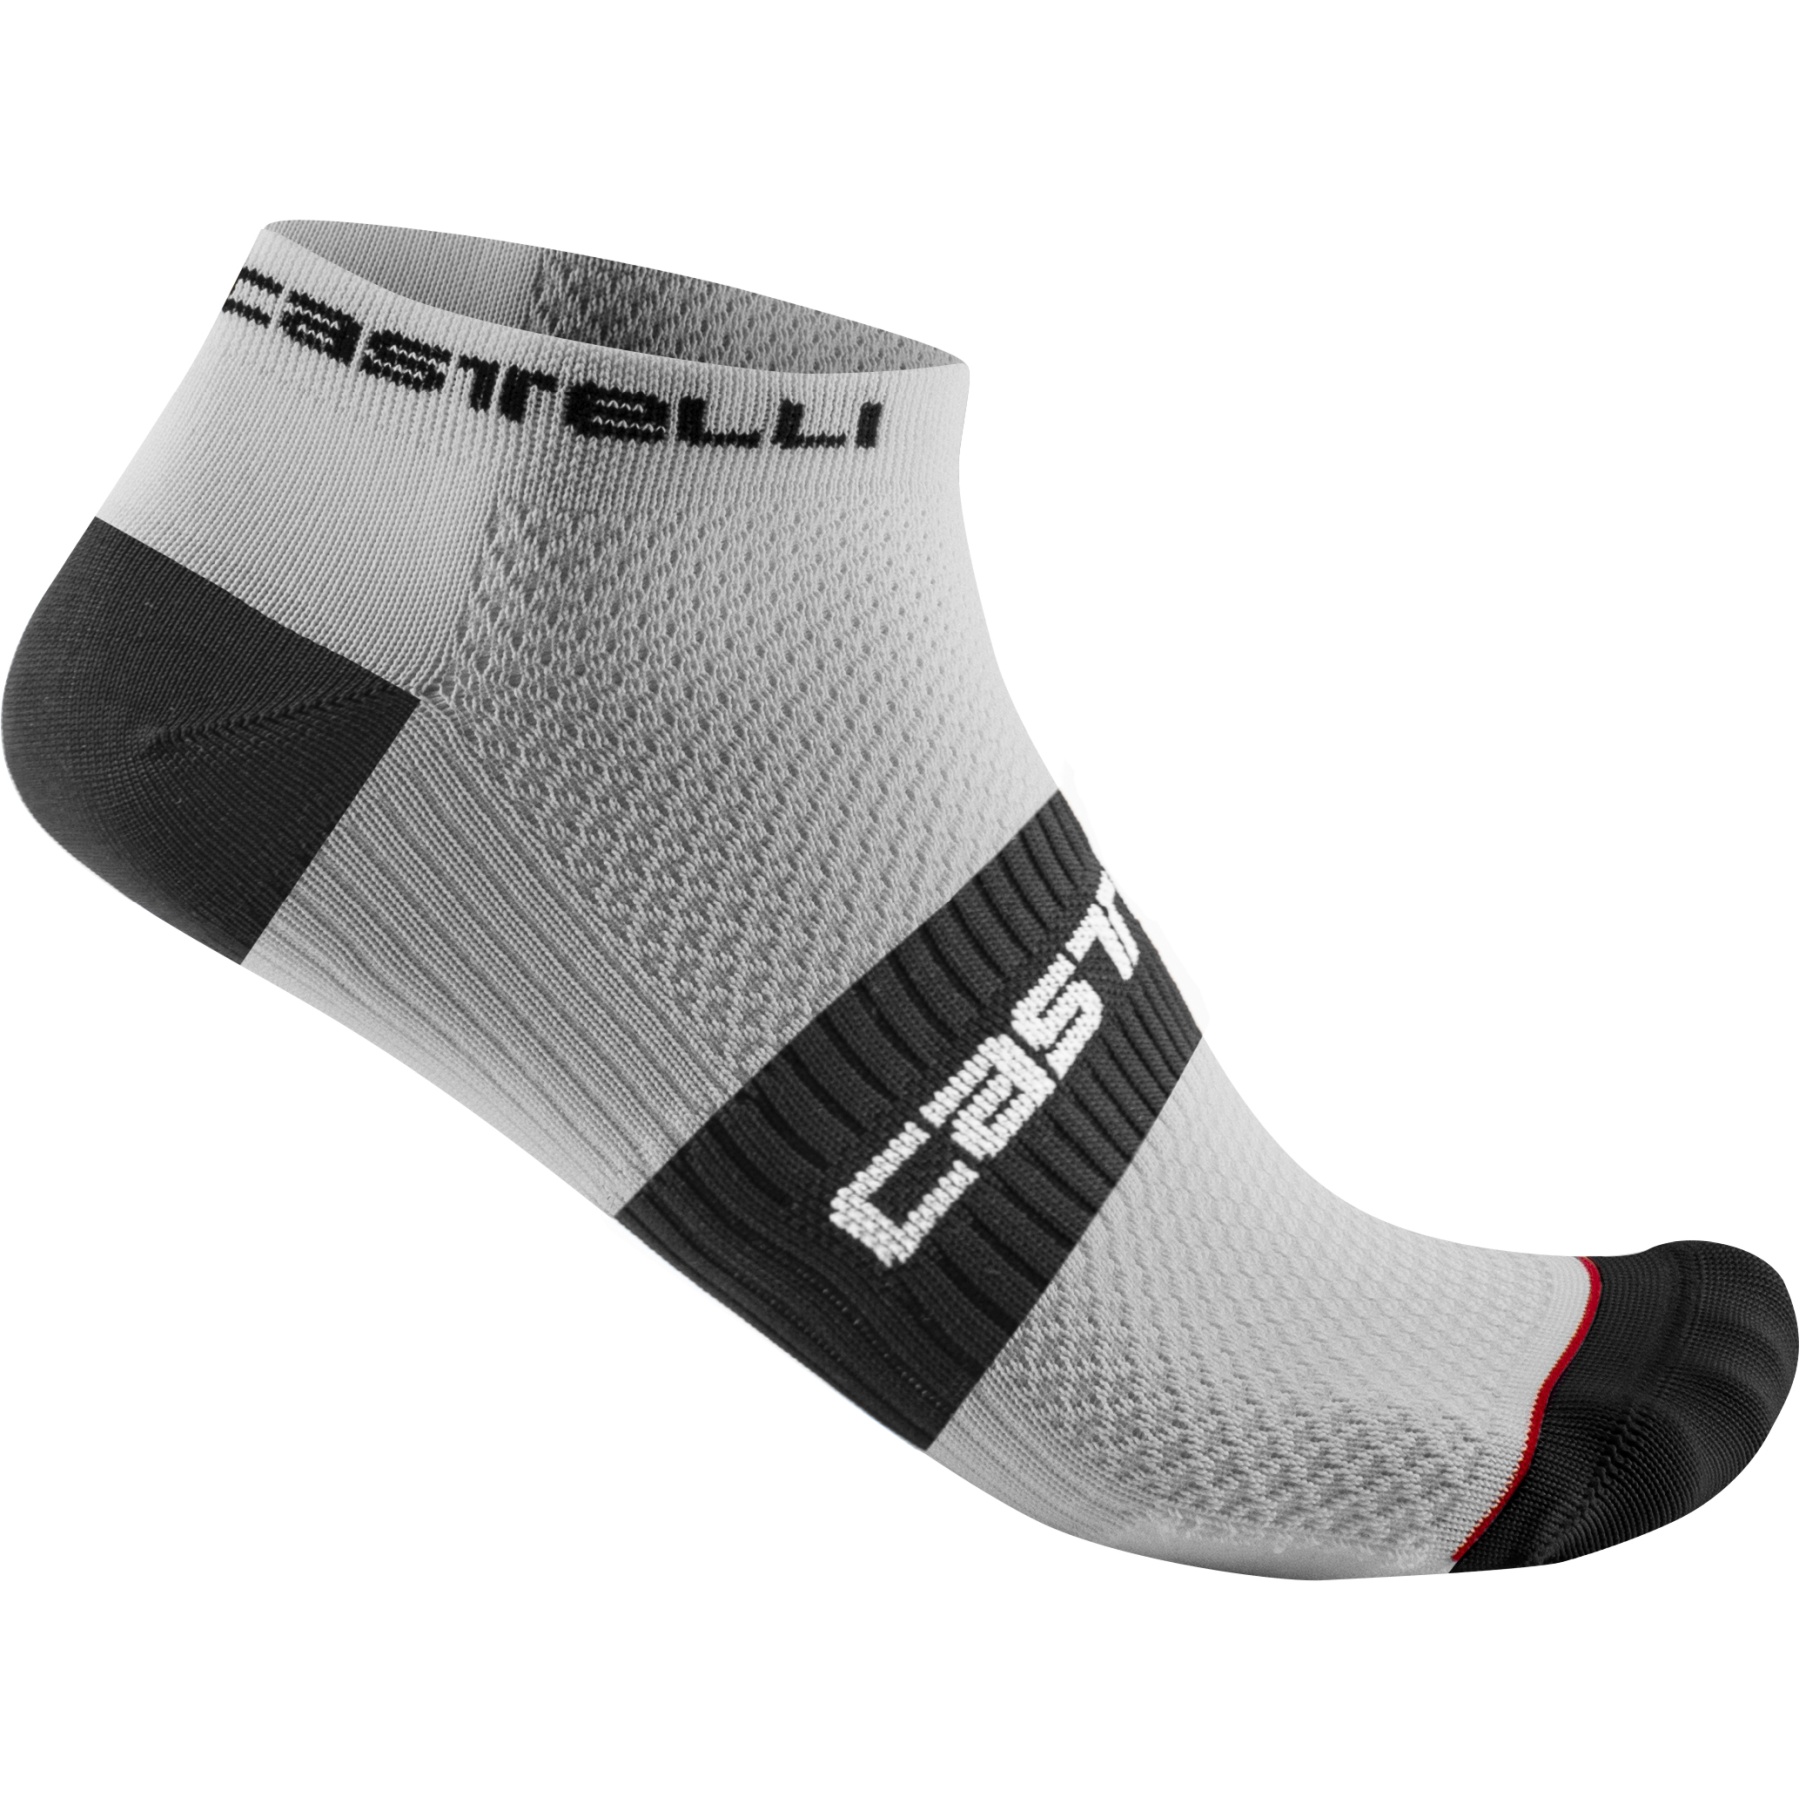 Picture of Castelli Lowboy 2 Socks - white black 001